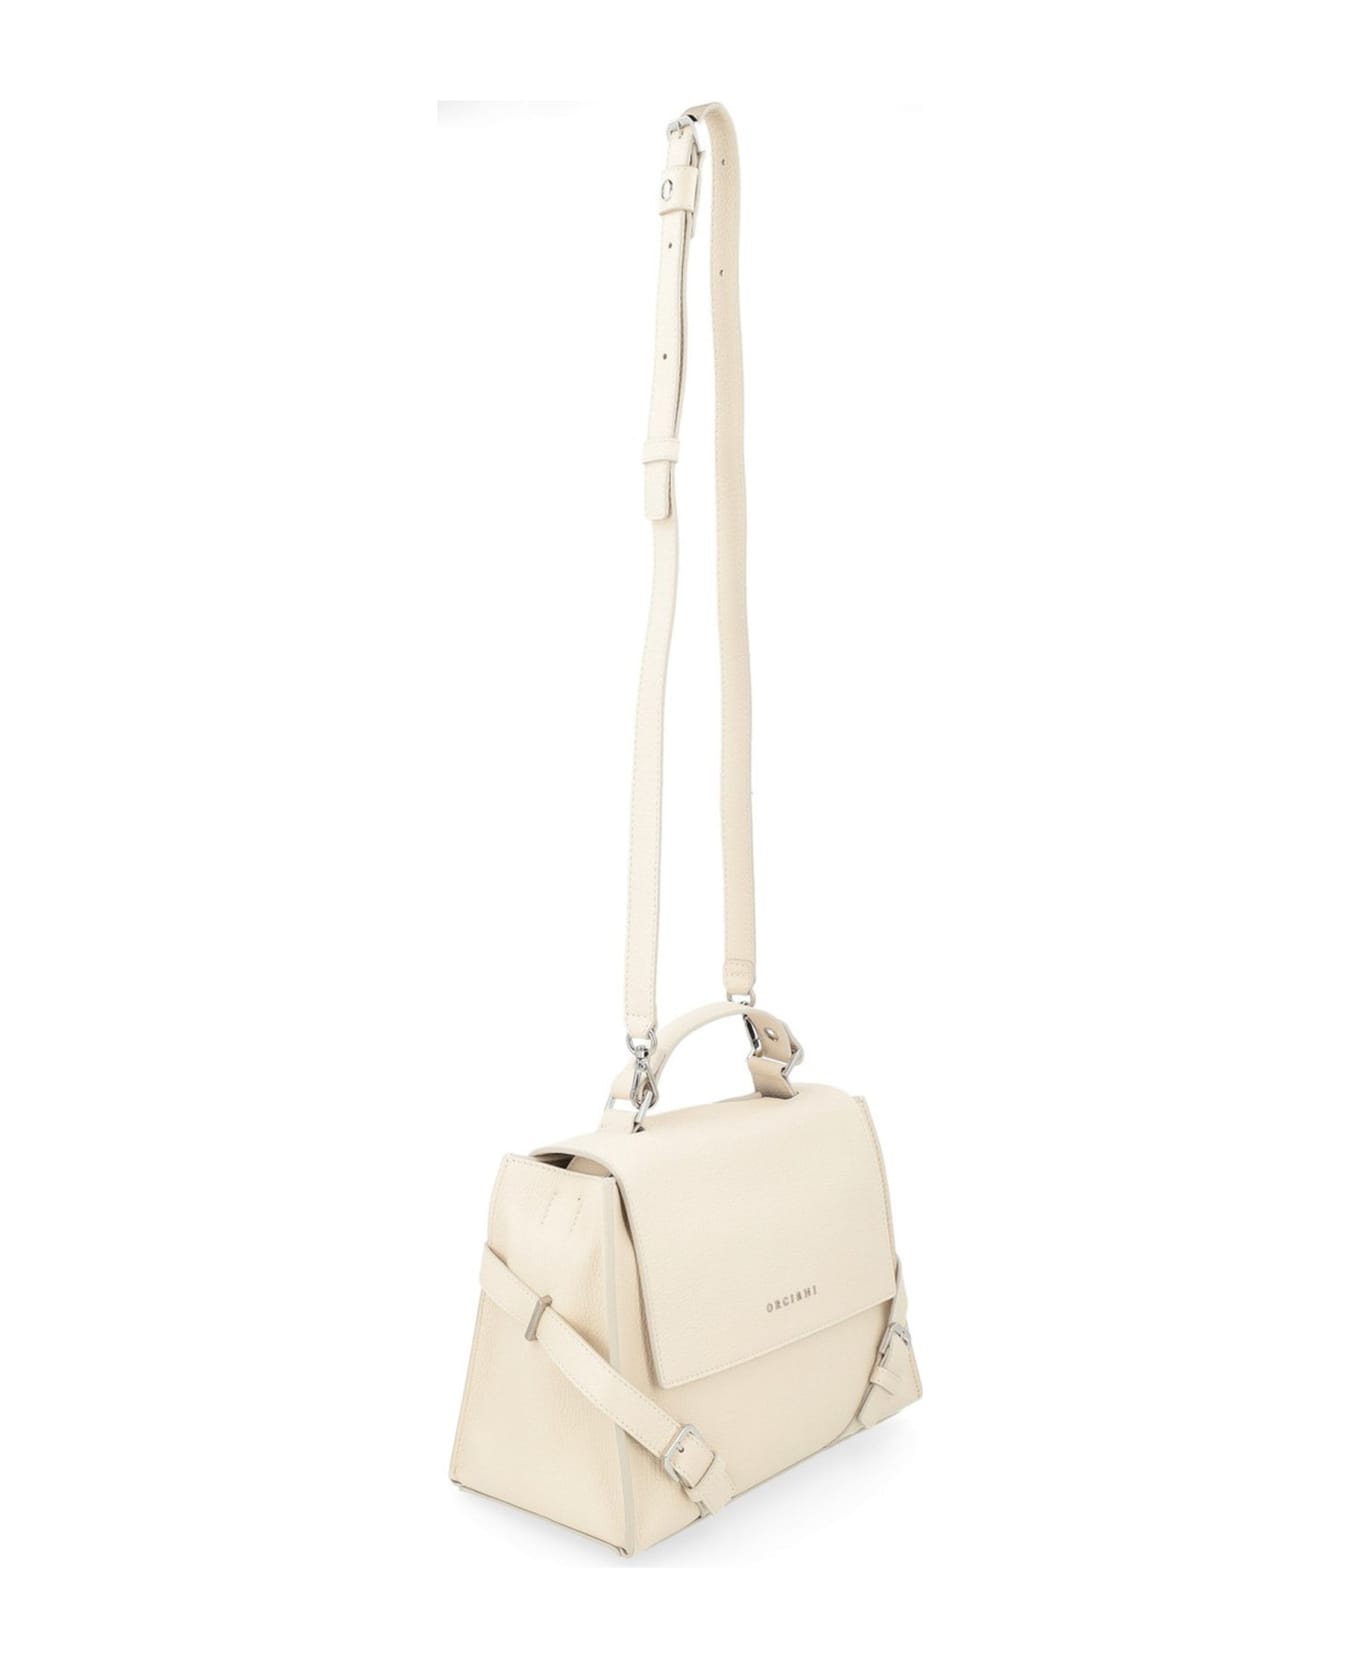 Orciani Sveva Sense Small Leather Handbag - White